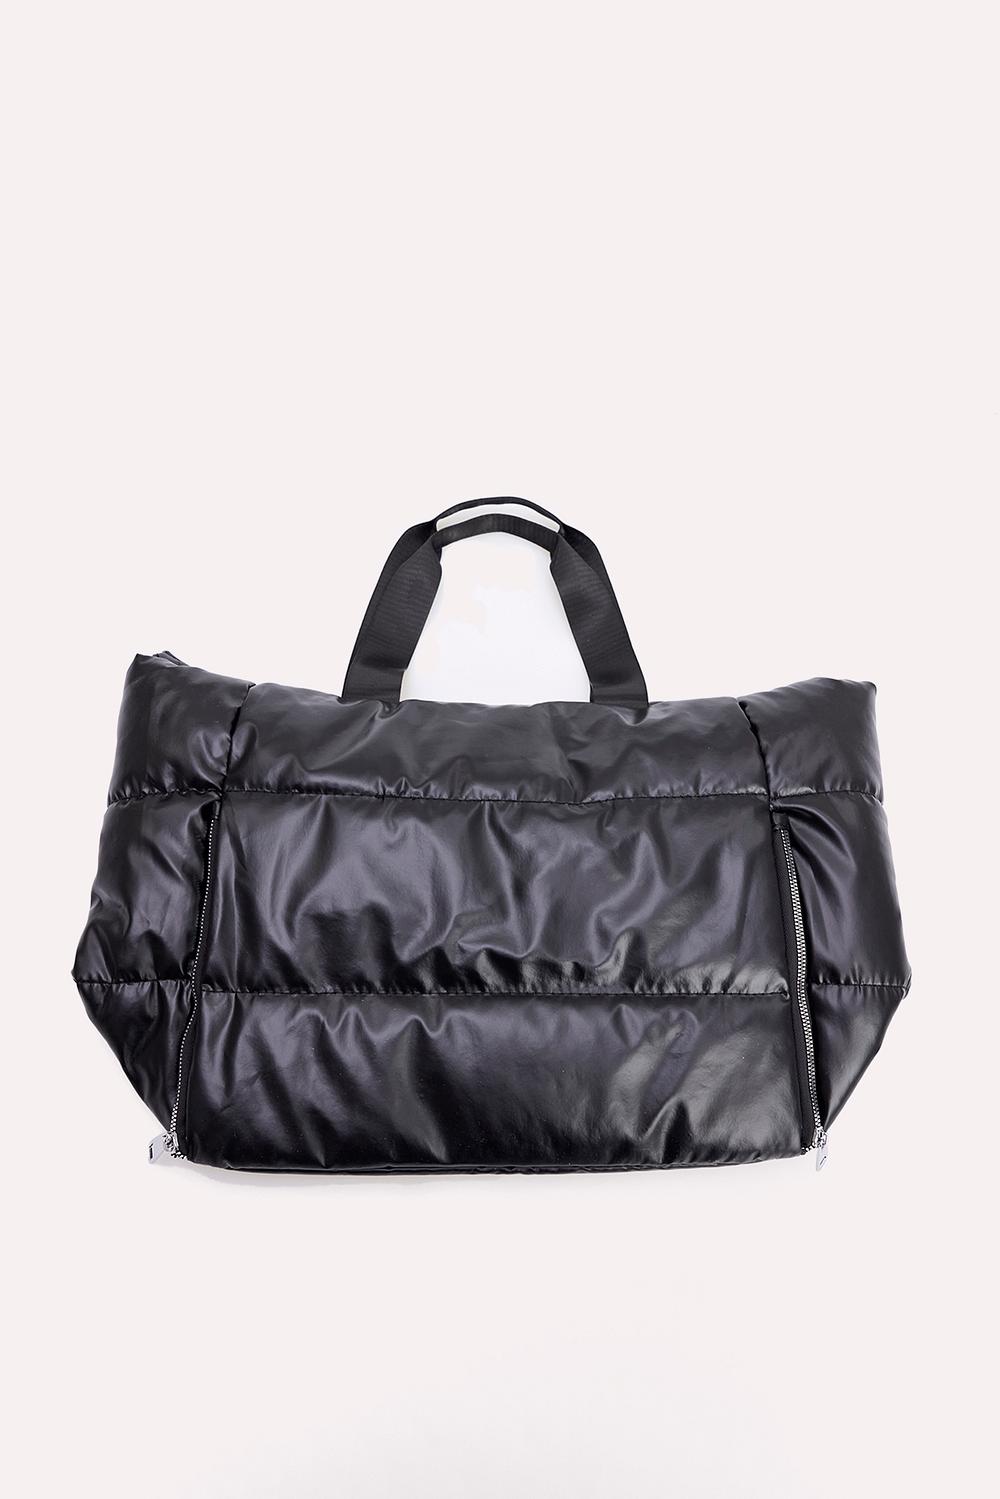 Black puffy tote bag